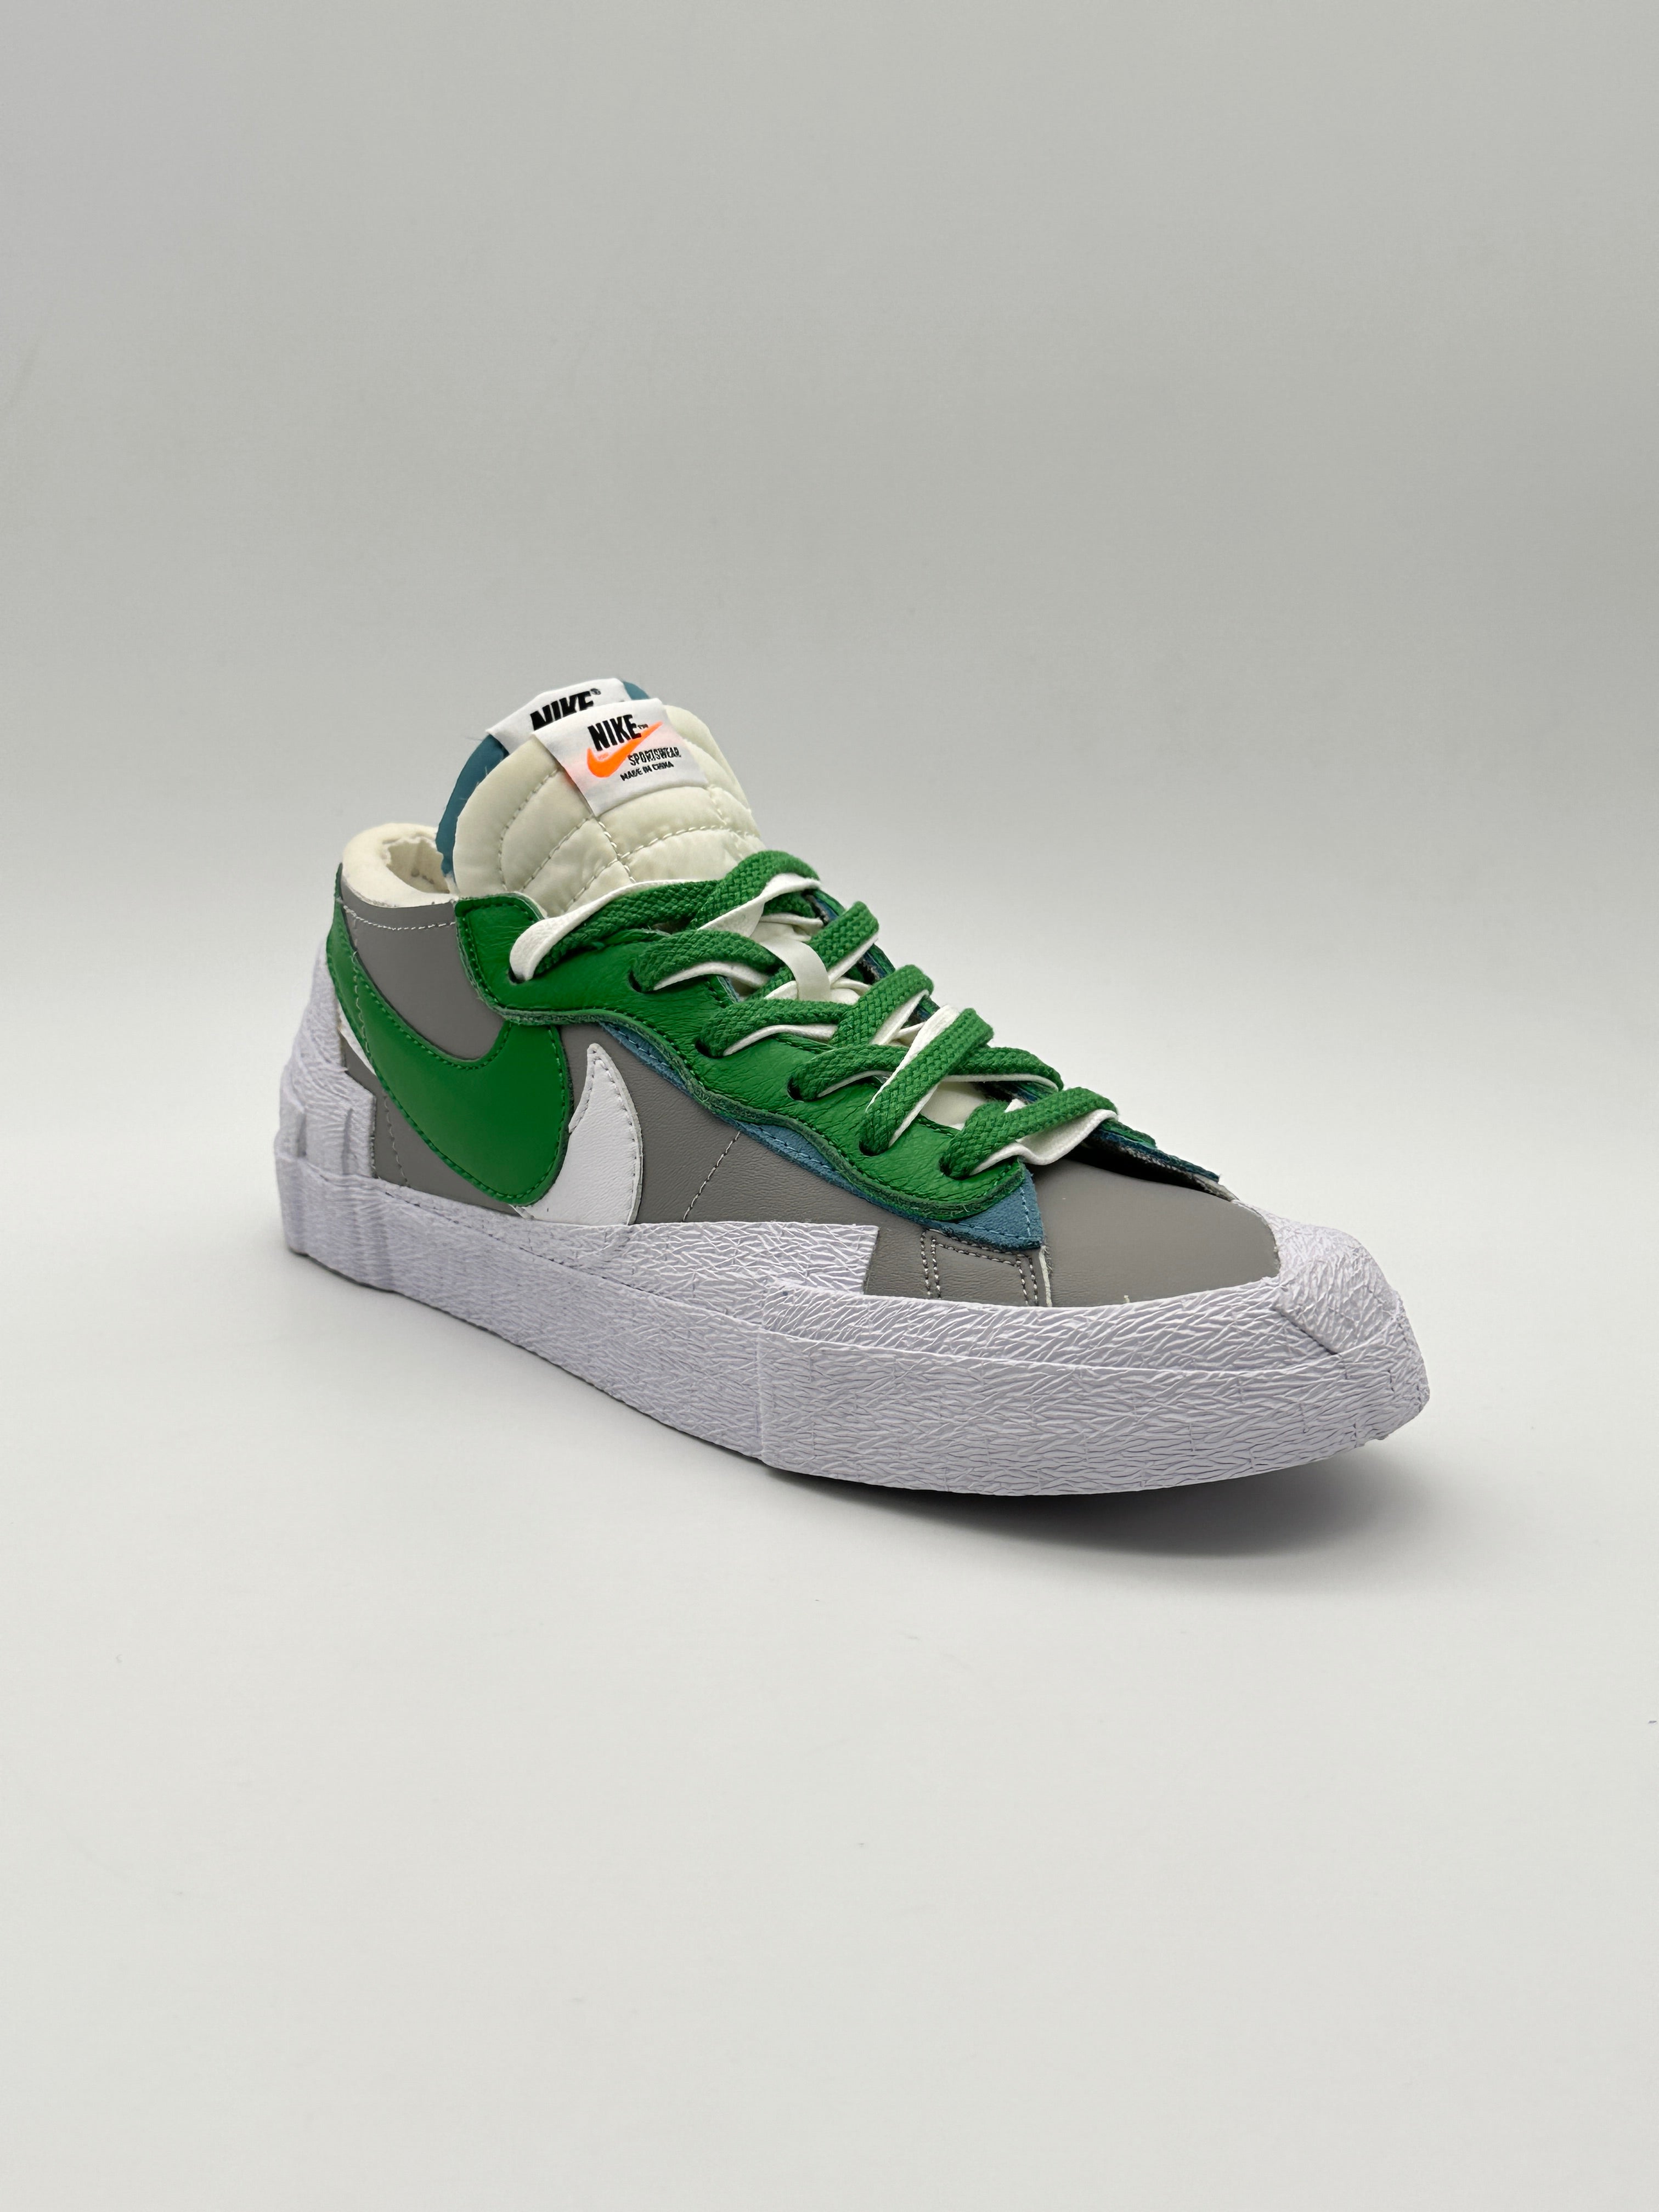 Blazer Low "Classic Green" Sneakers